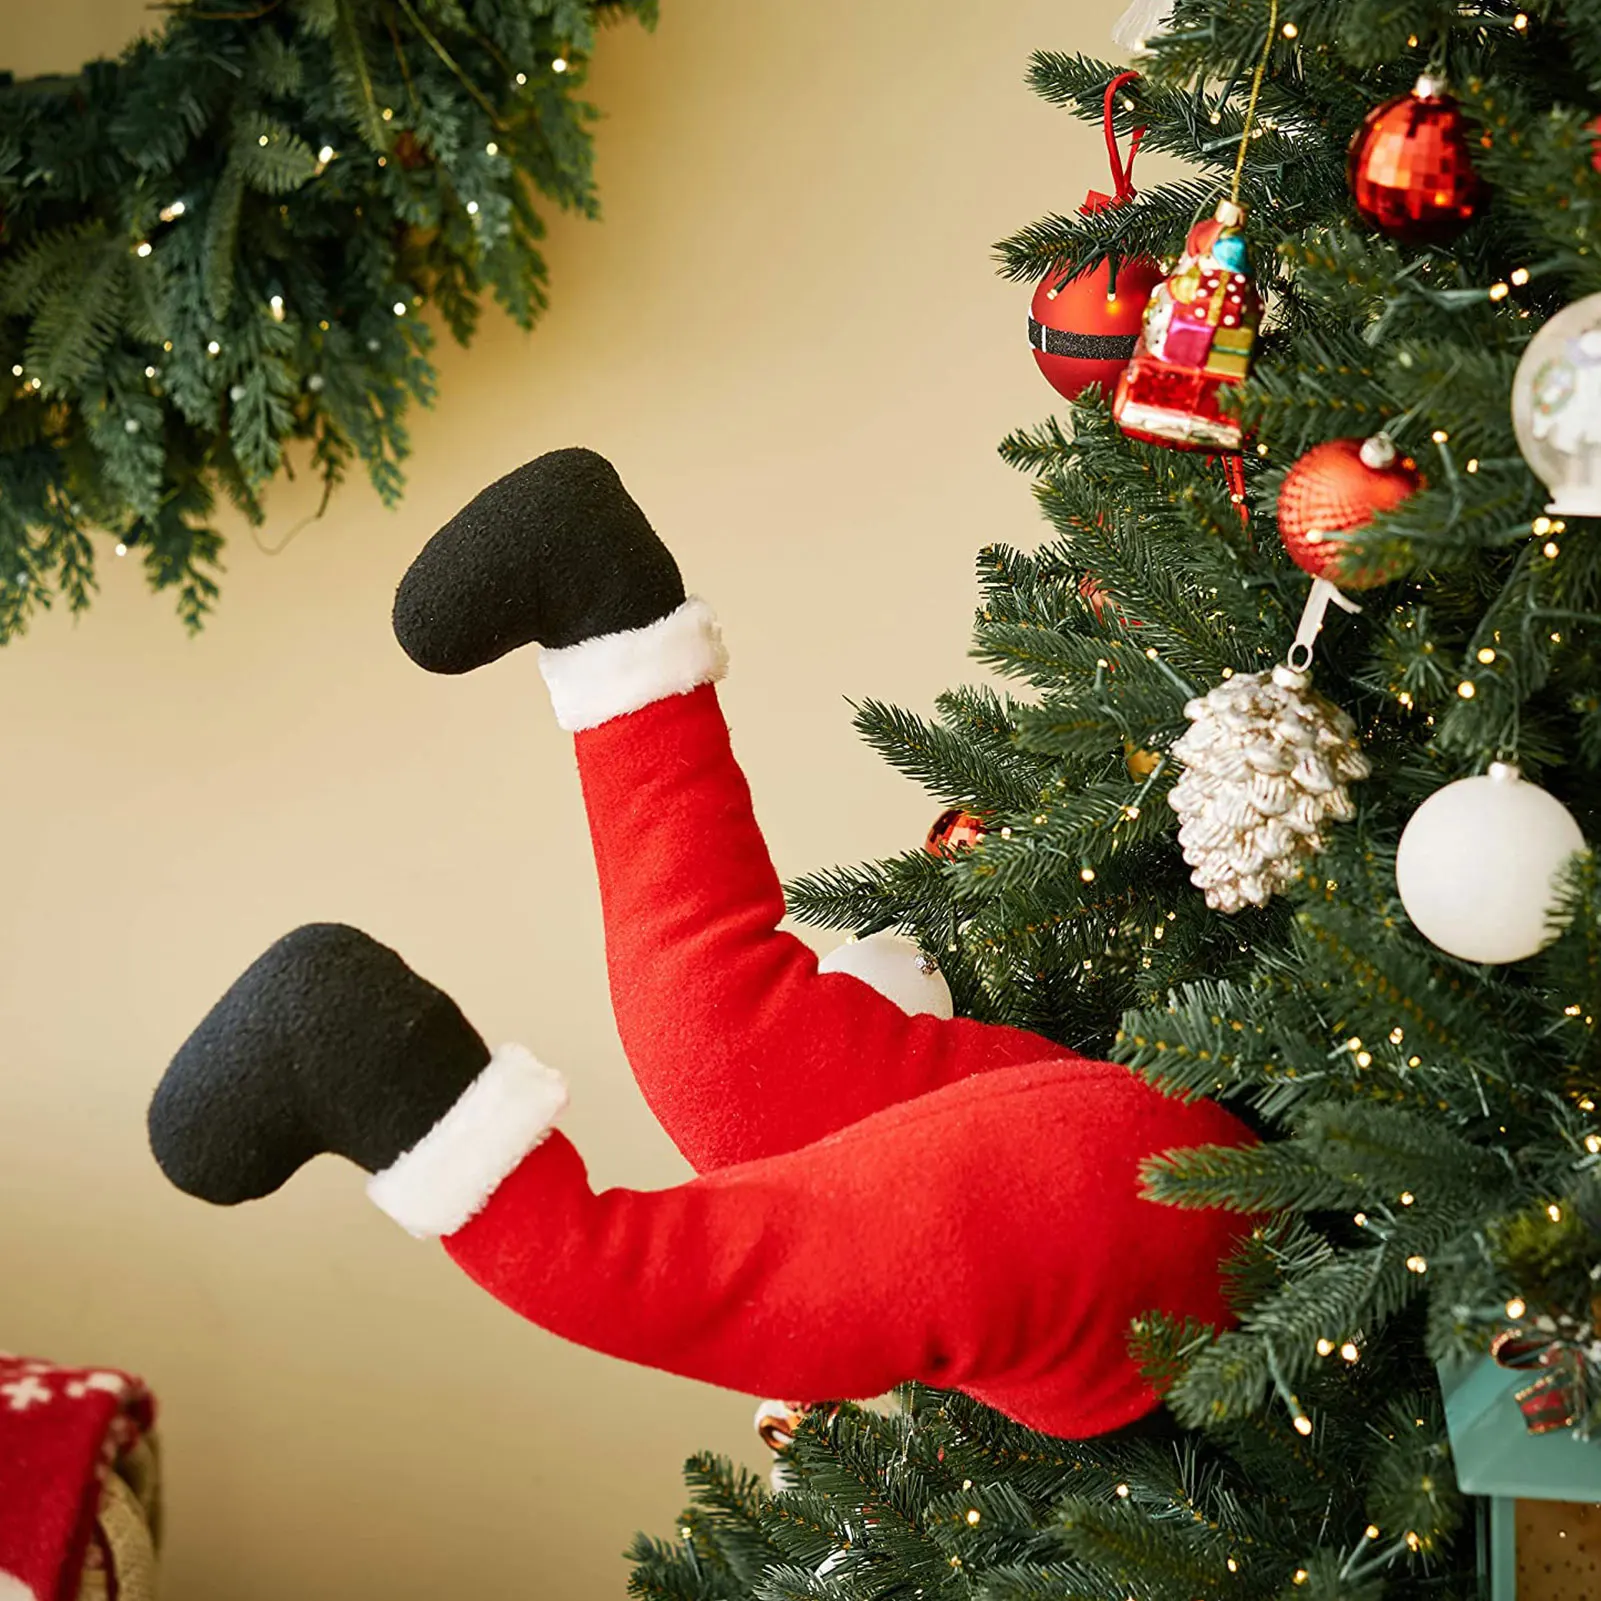 

Christmas Santa Claus Plush Legs Funny Stuffed Leg Wreath Christmas Tree Ornaments Xxmas Window Door Decorations 2021 vividly